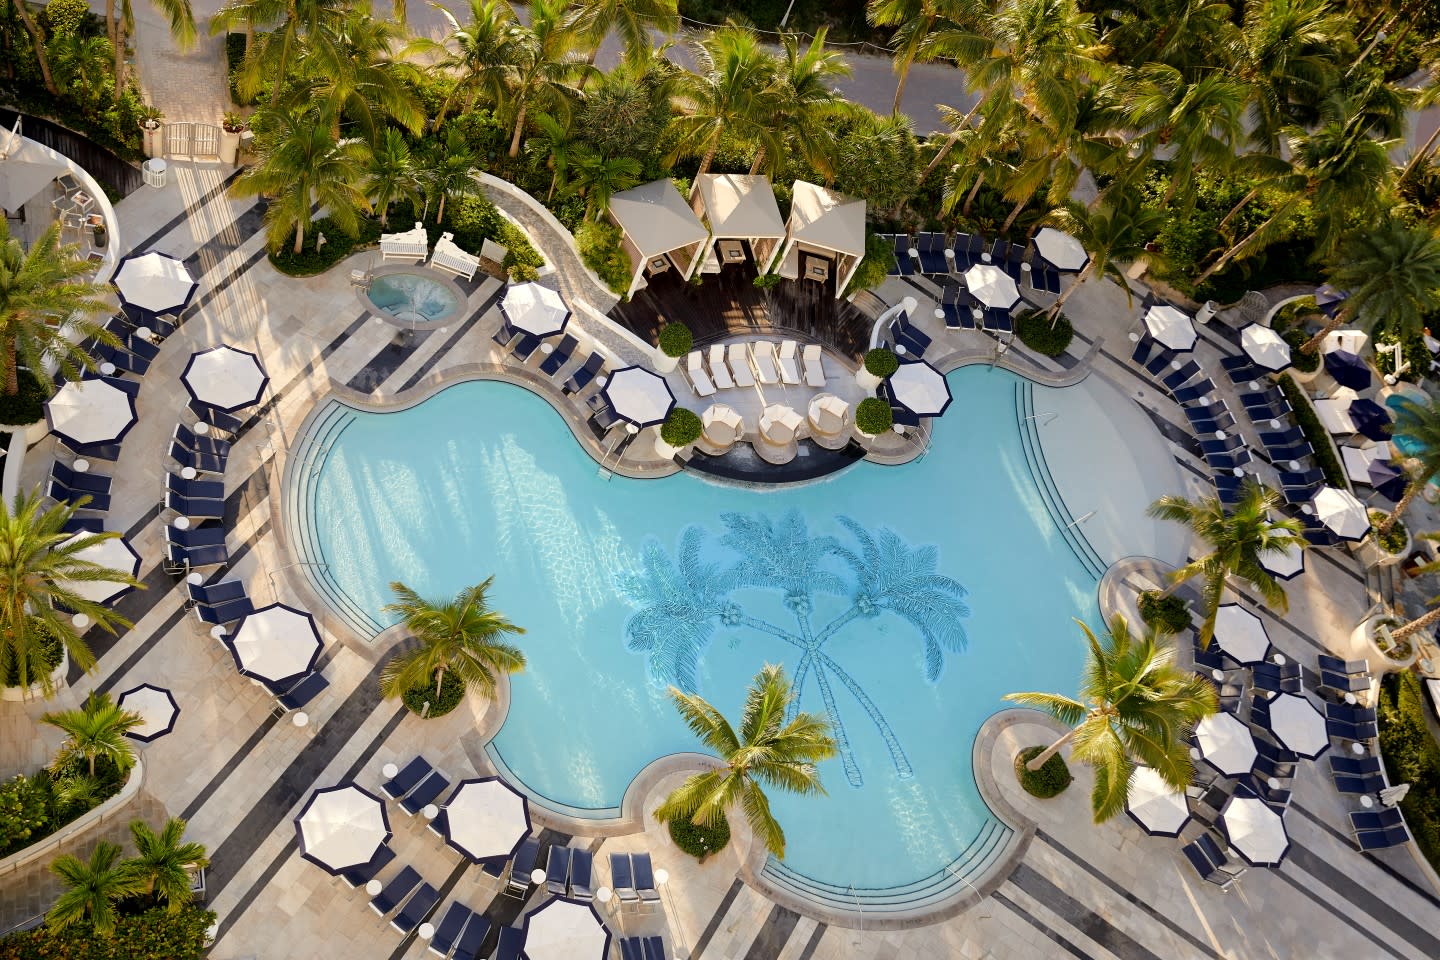 Hotel Park Royal Miami Beach, United States